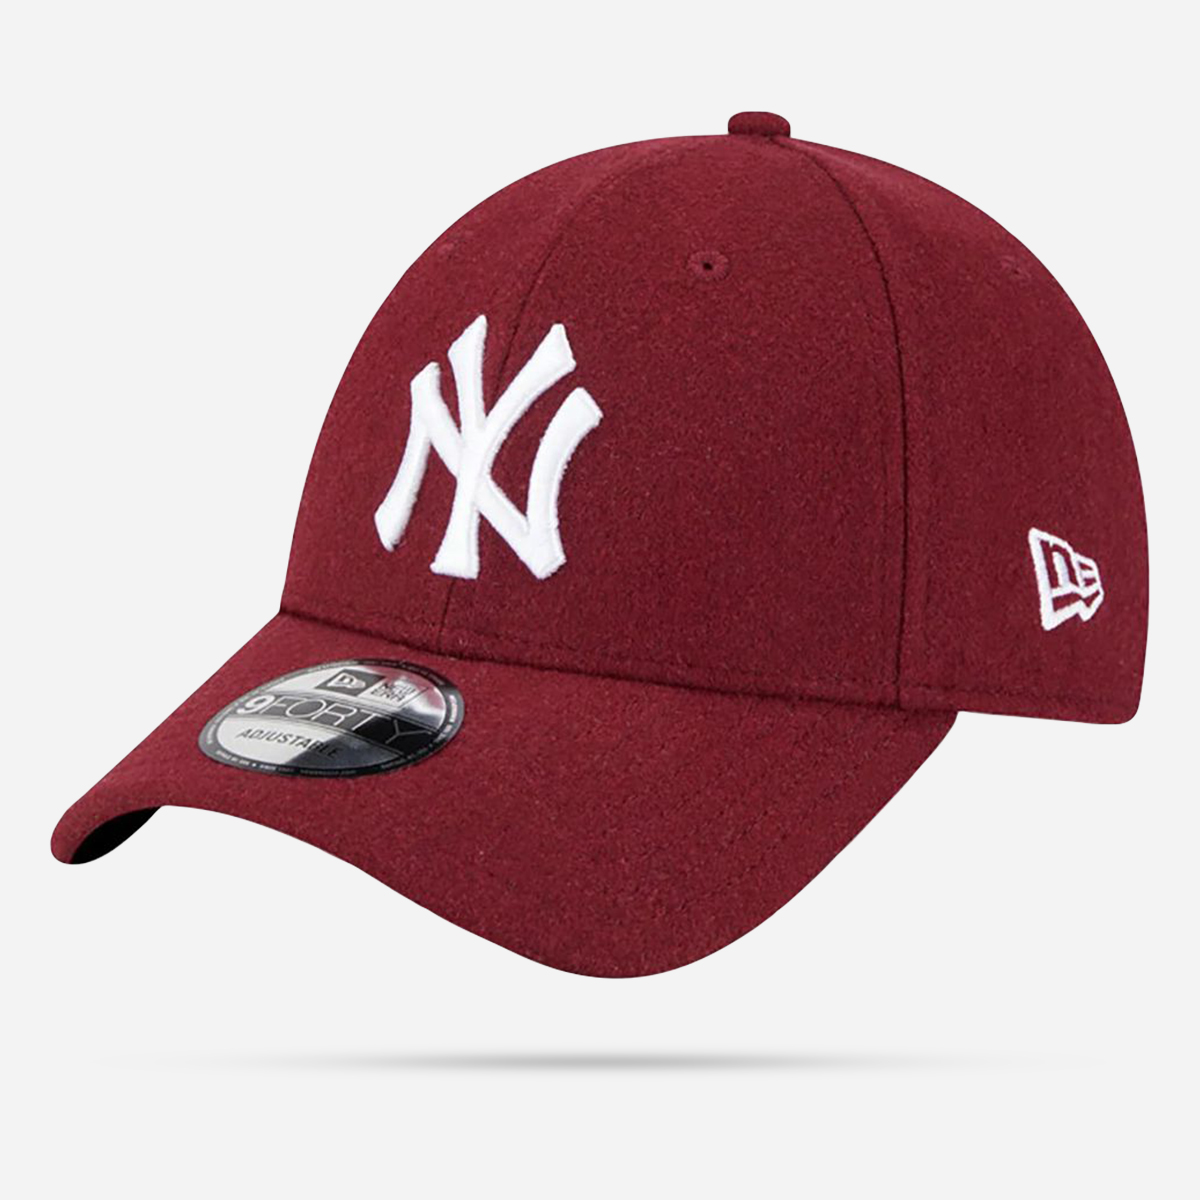 AN305071 New York Yankees Cap